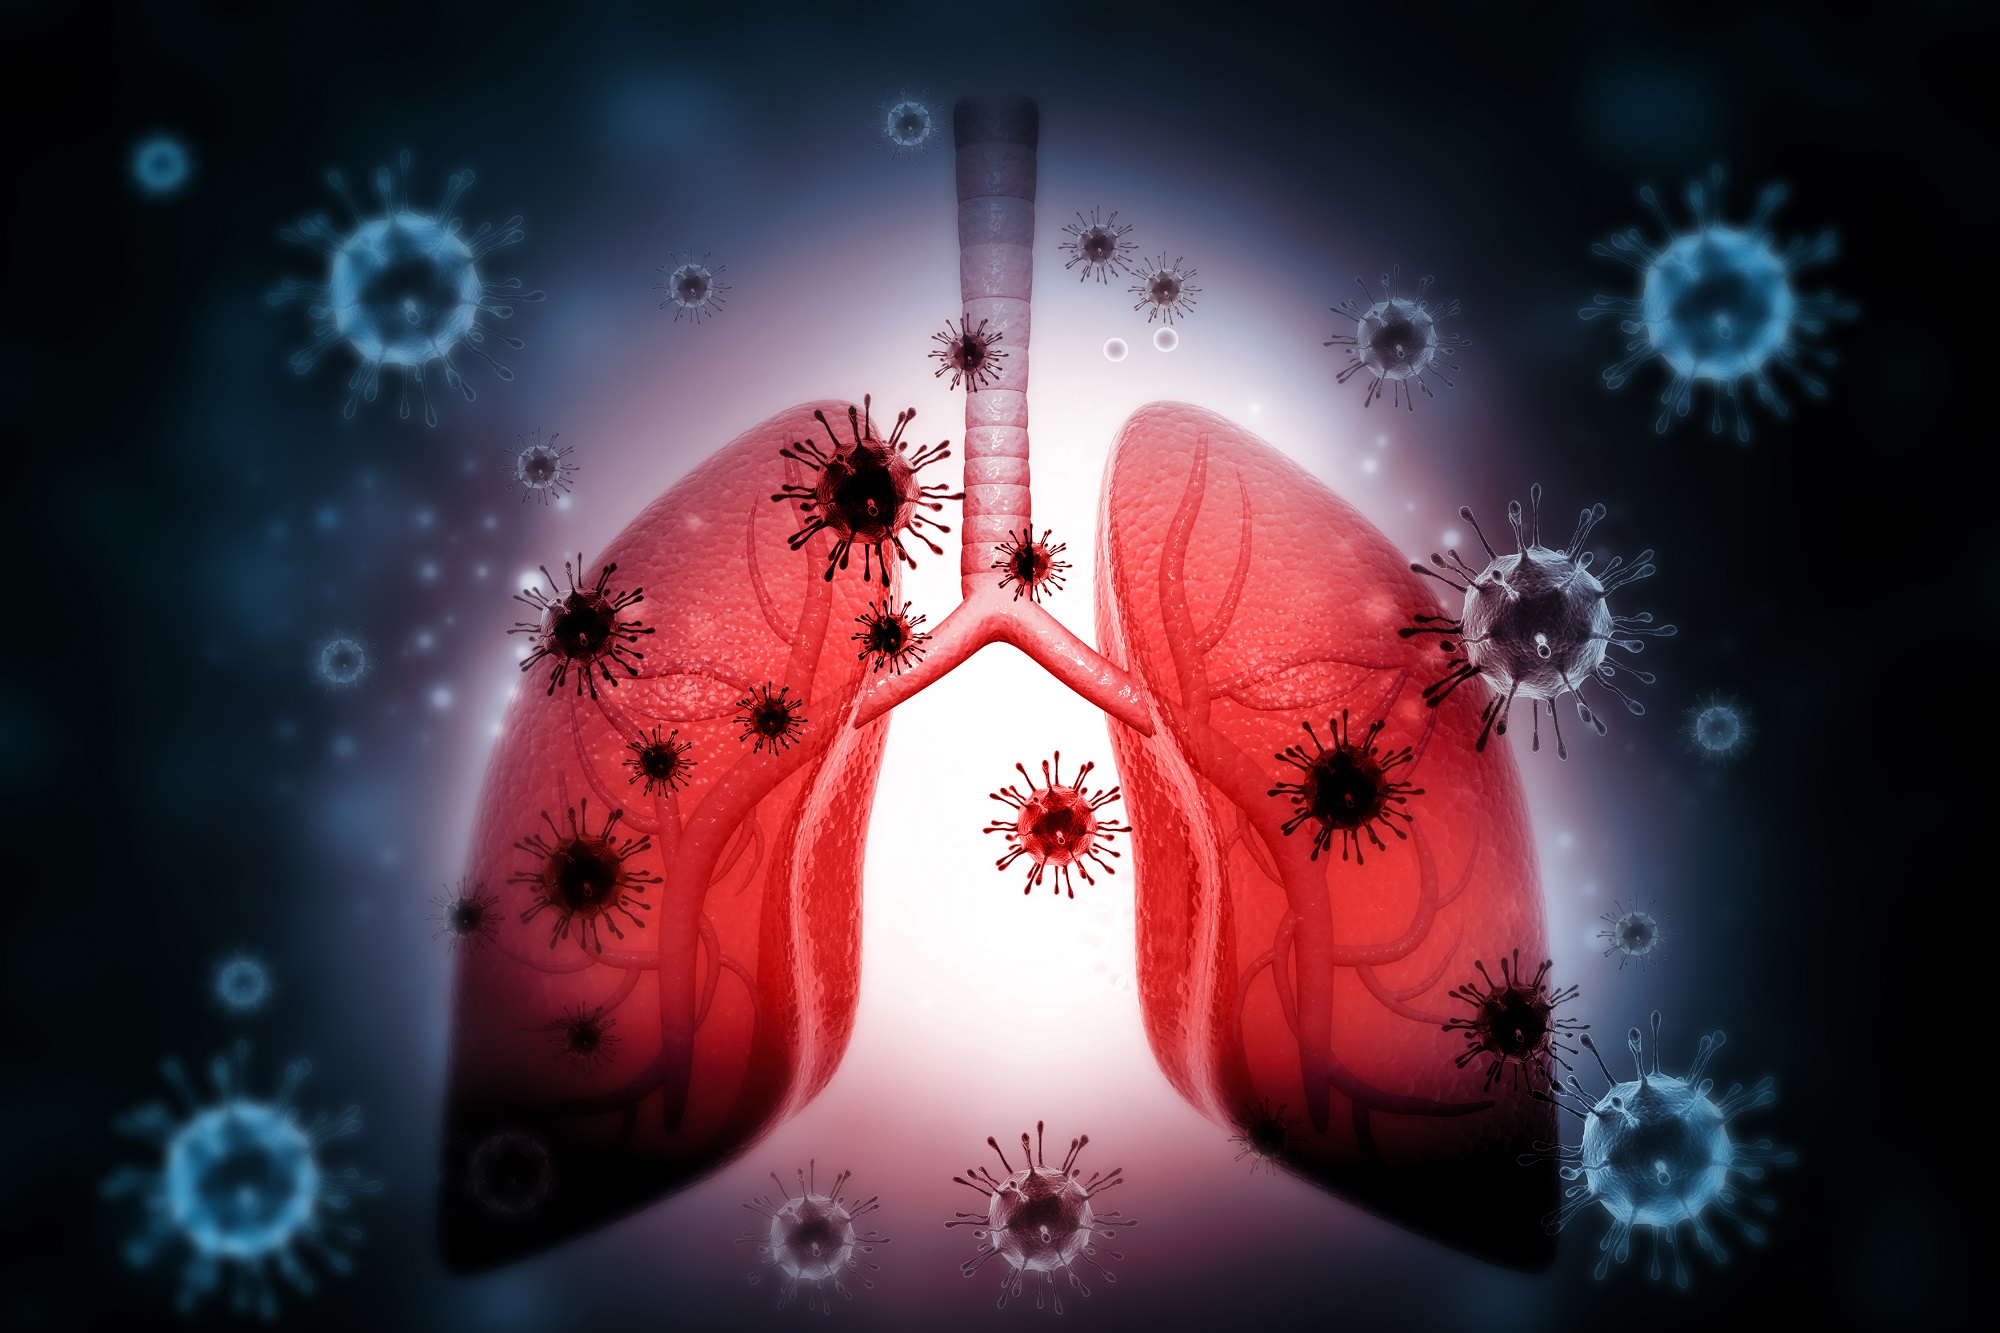 pulmonary diseases and disorders